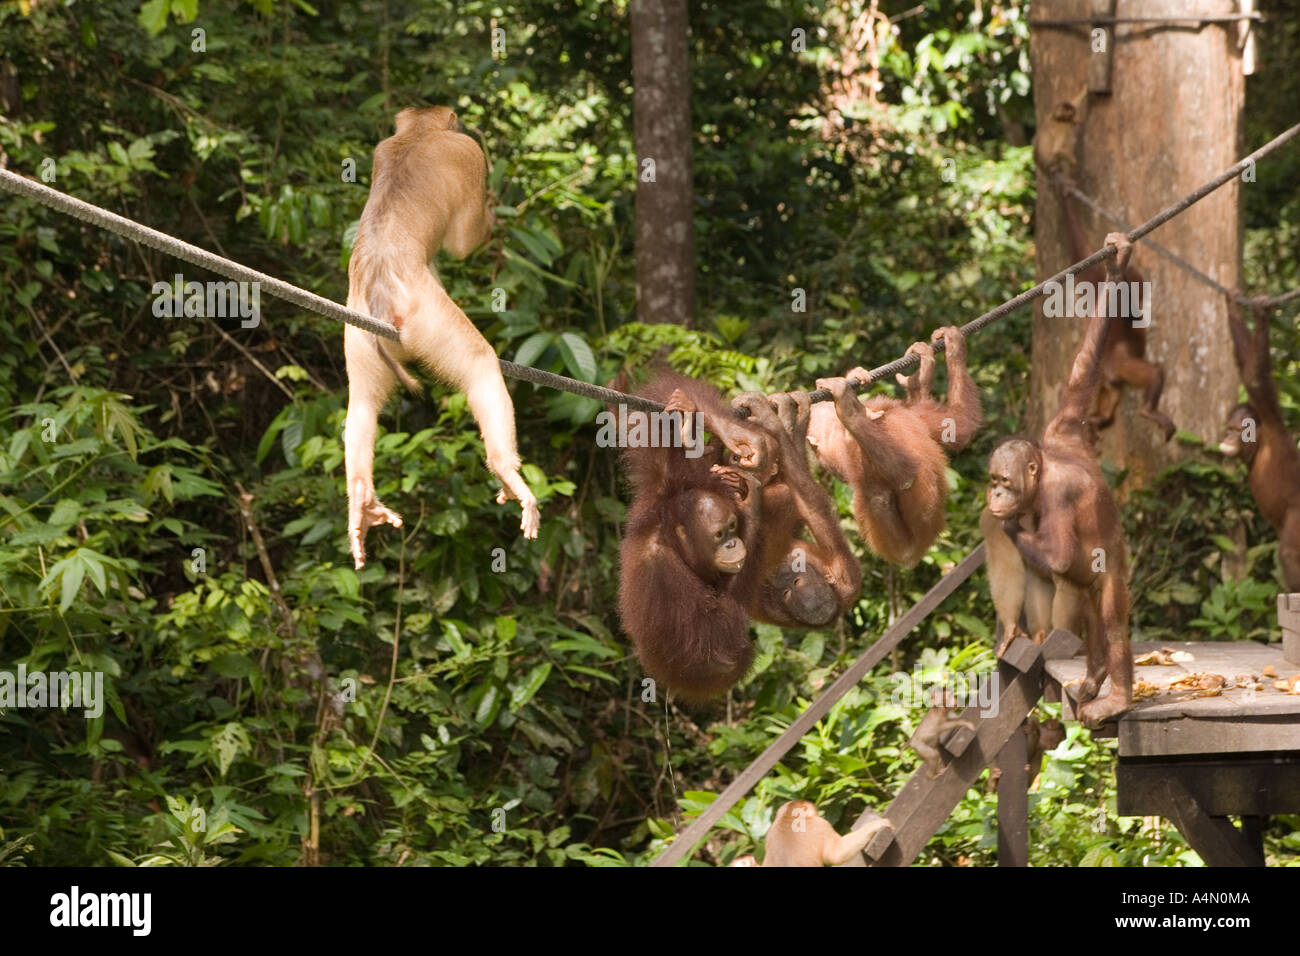 Malaysia Borneo Sabah Sepilok Primaten junger Orang Utans Pongo Pygmaeus und Makaken am Seil Stockfoto